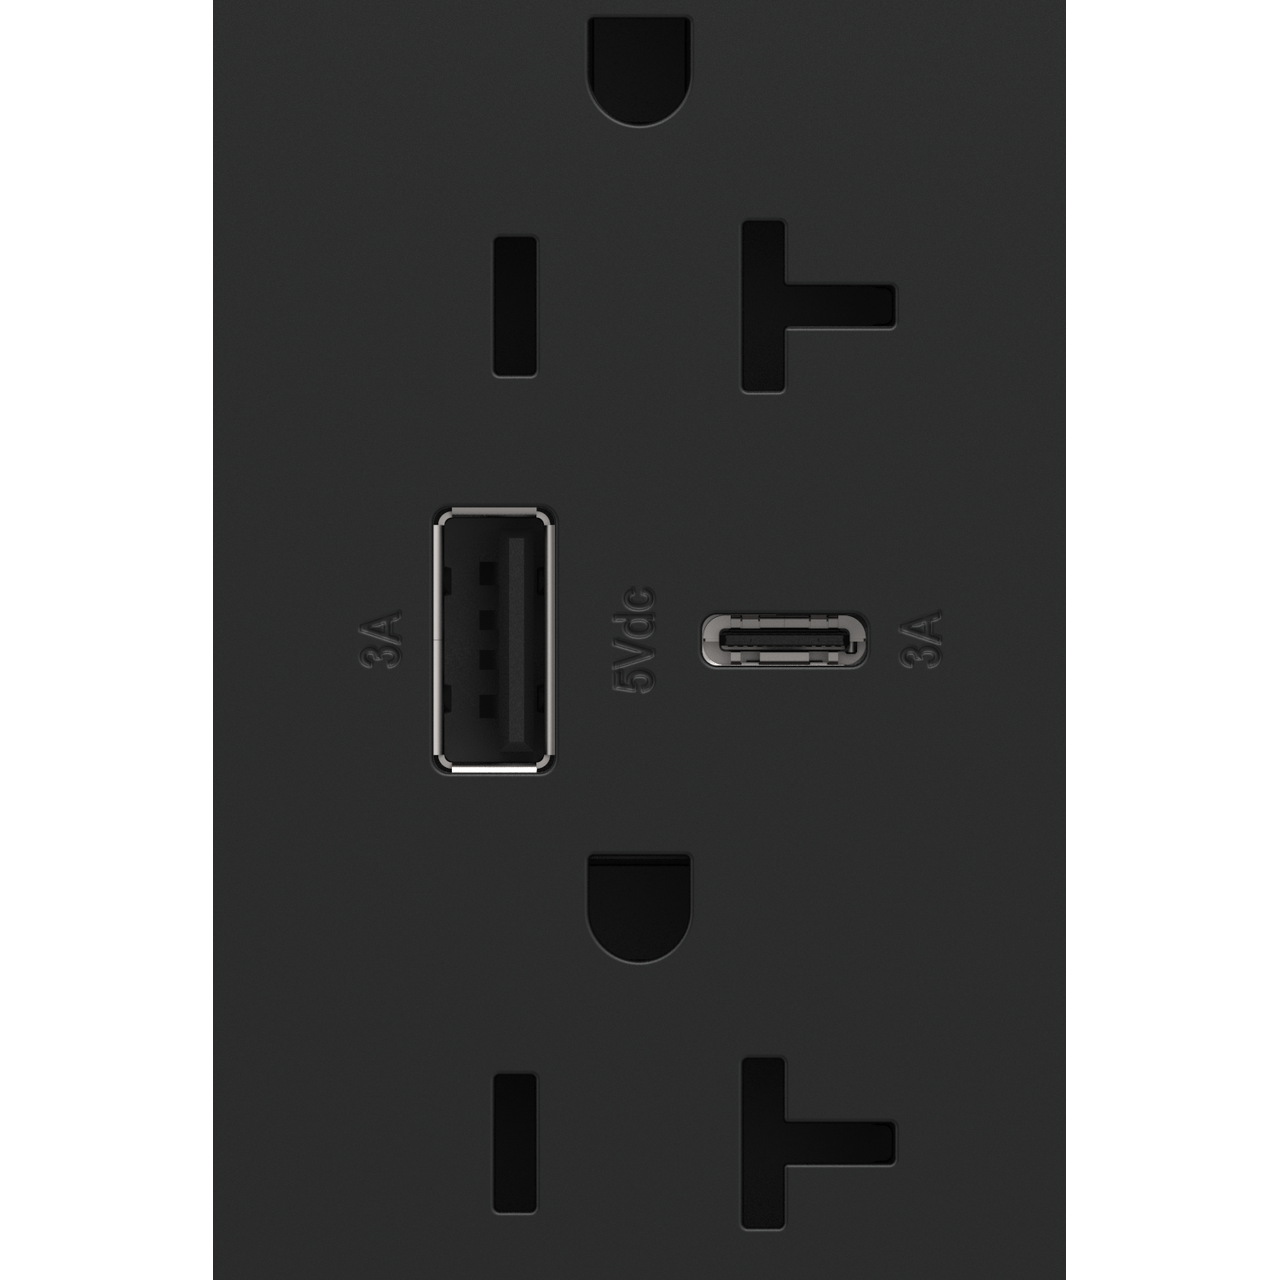 Legrand - Adorne 20A Tamper-Resistant Ultra-Fast USB Type A/C Outlet - Lights Canada